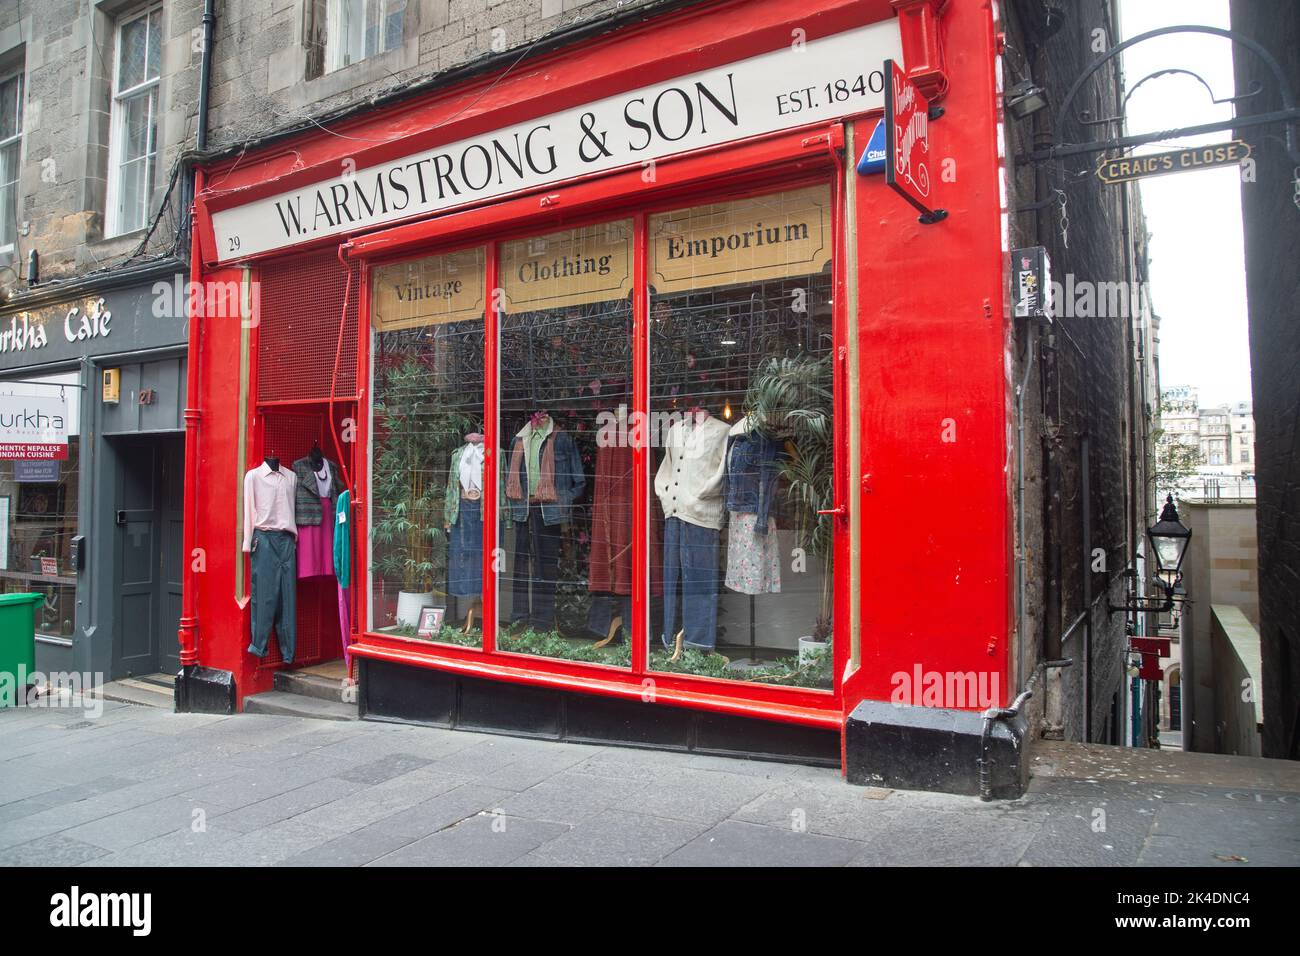 Edinburgh, Scotland, September 26th 2022,The shop front of W Armstrong & son, vintage clothing emporium Stock Photo